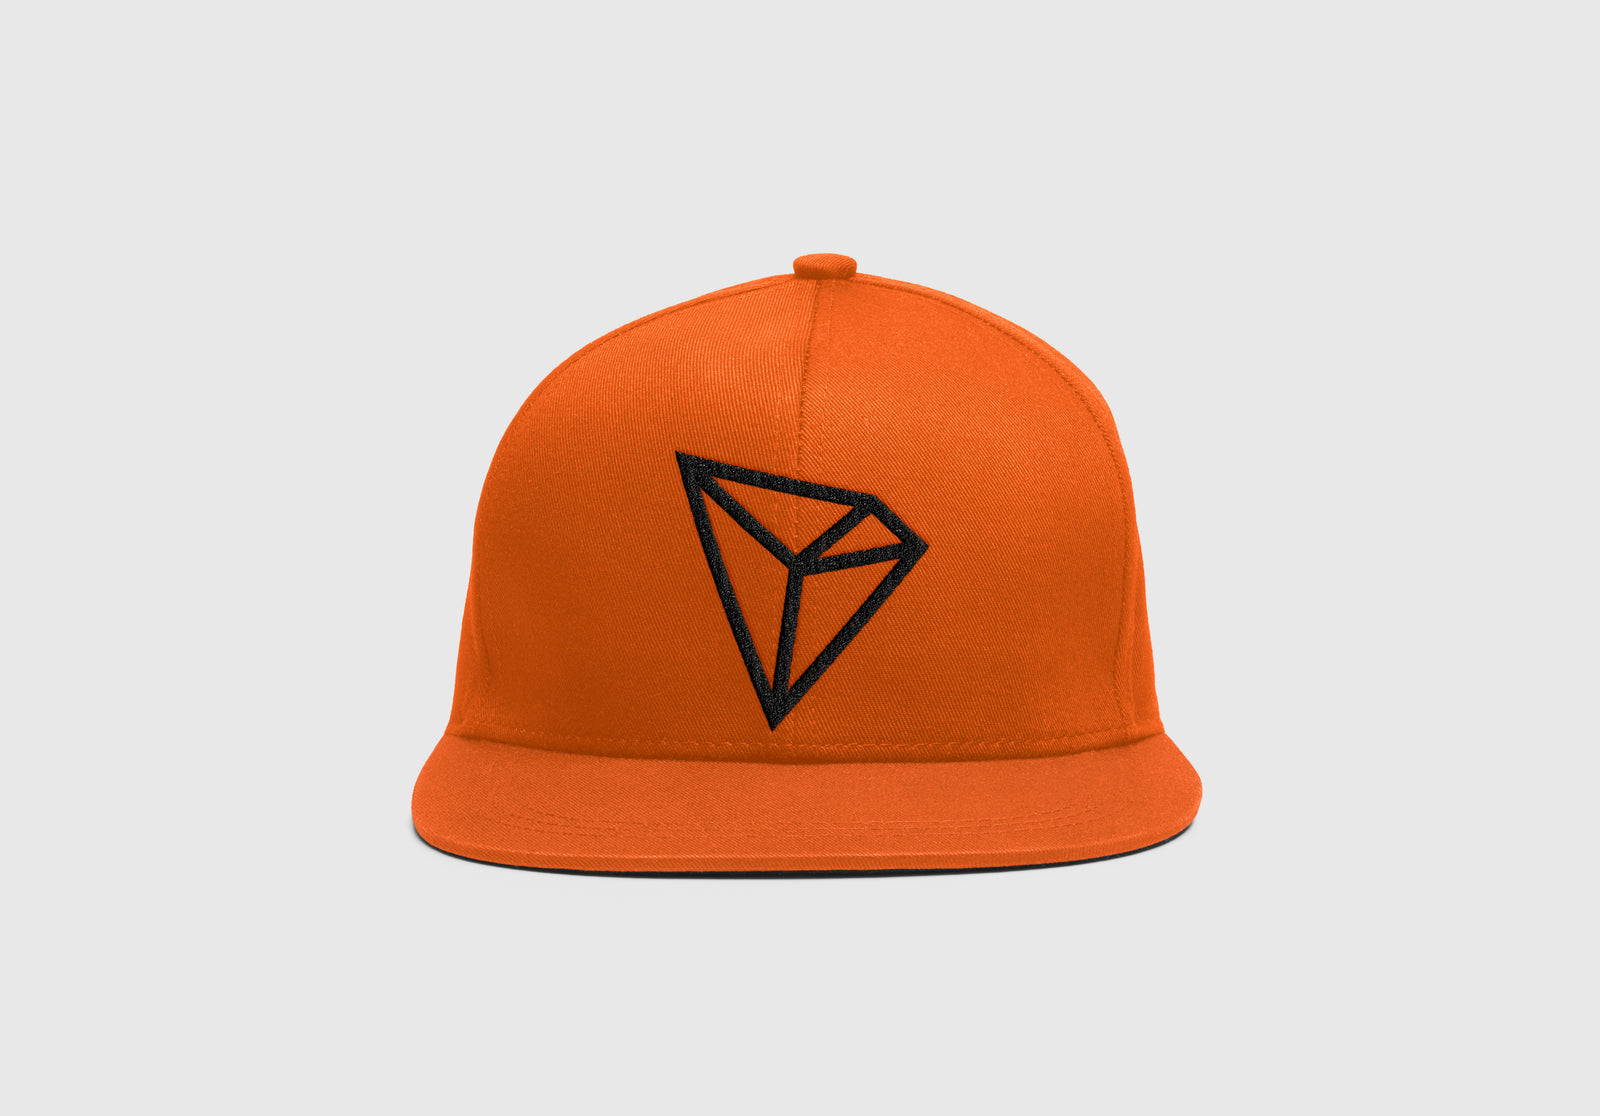 Tron Crypto TRX Snapback Hat